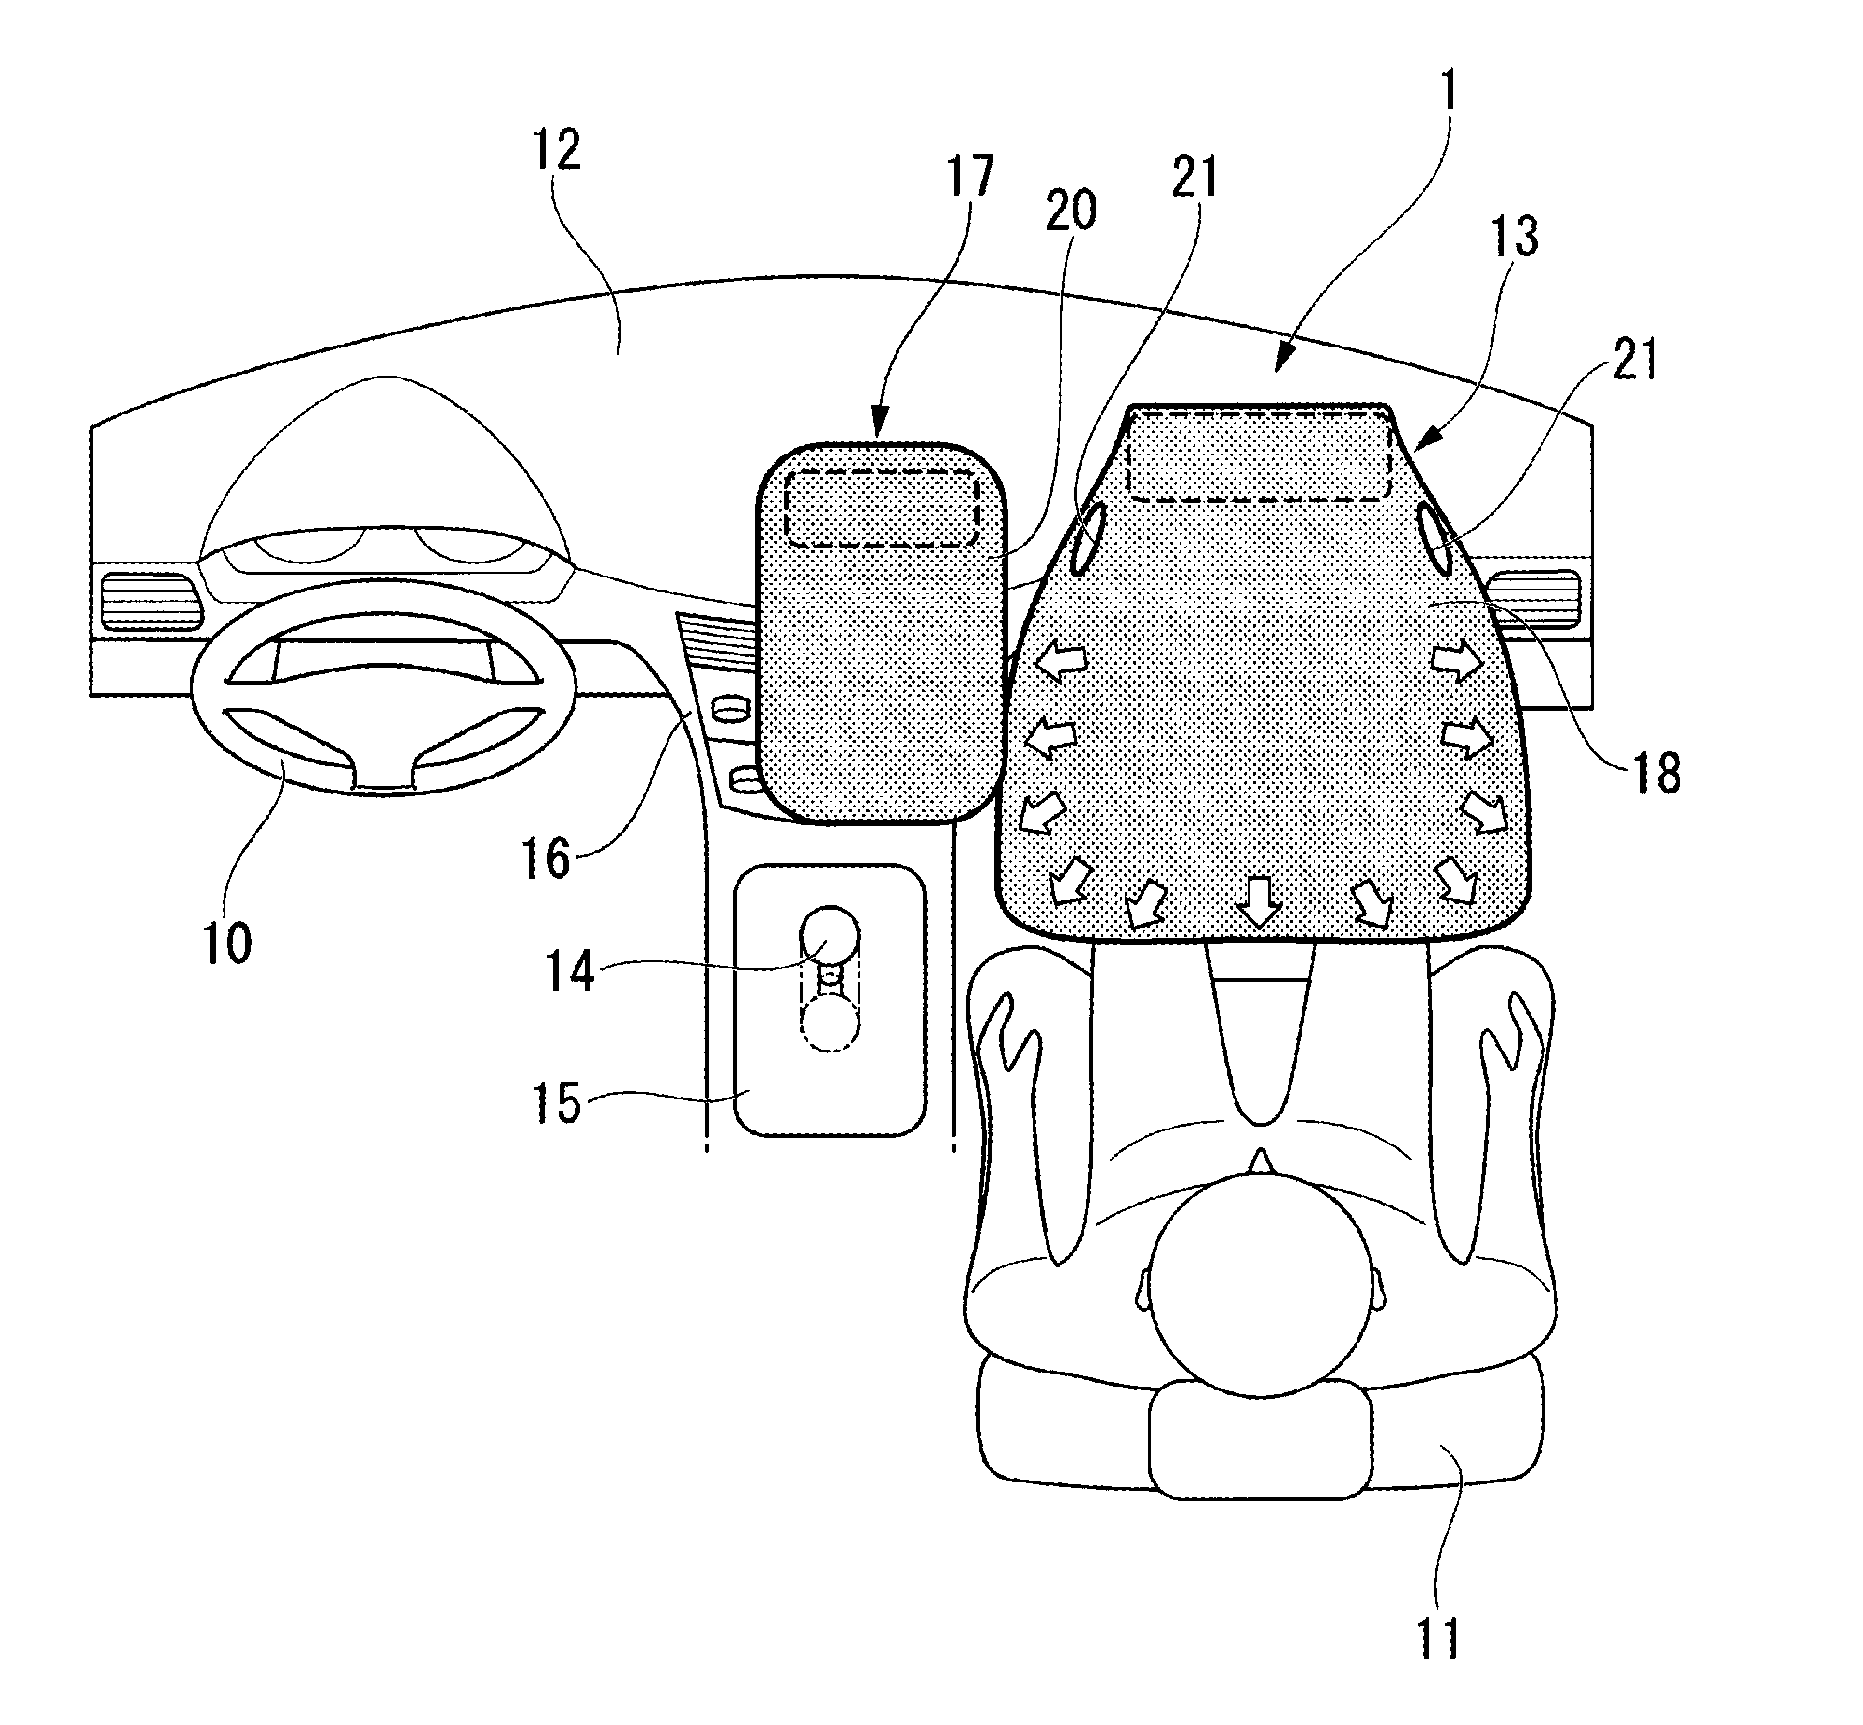 Airbag device